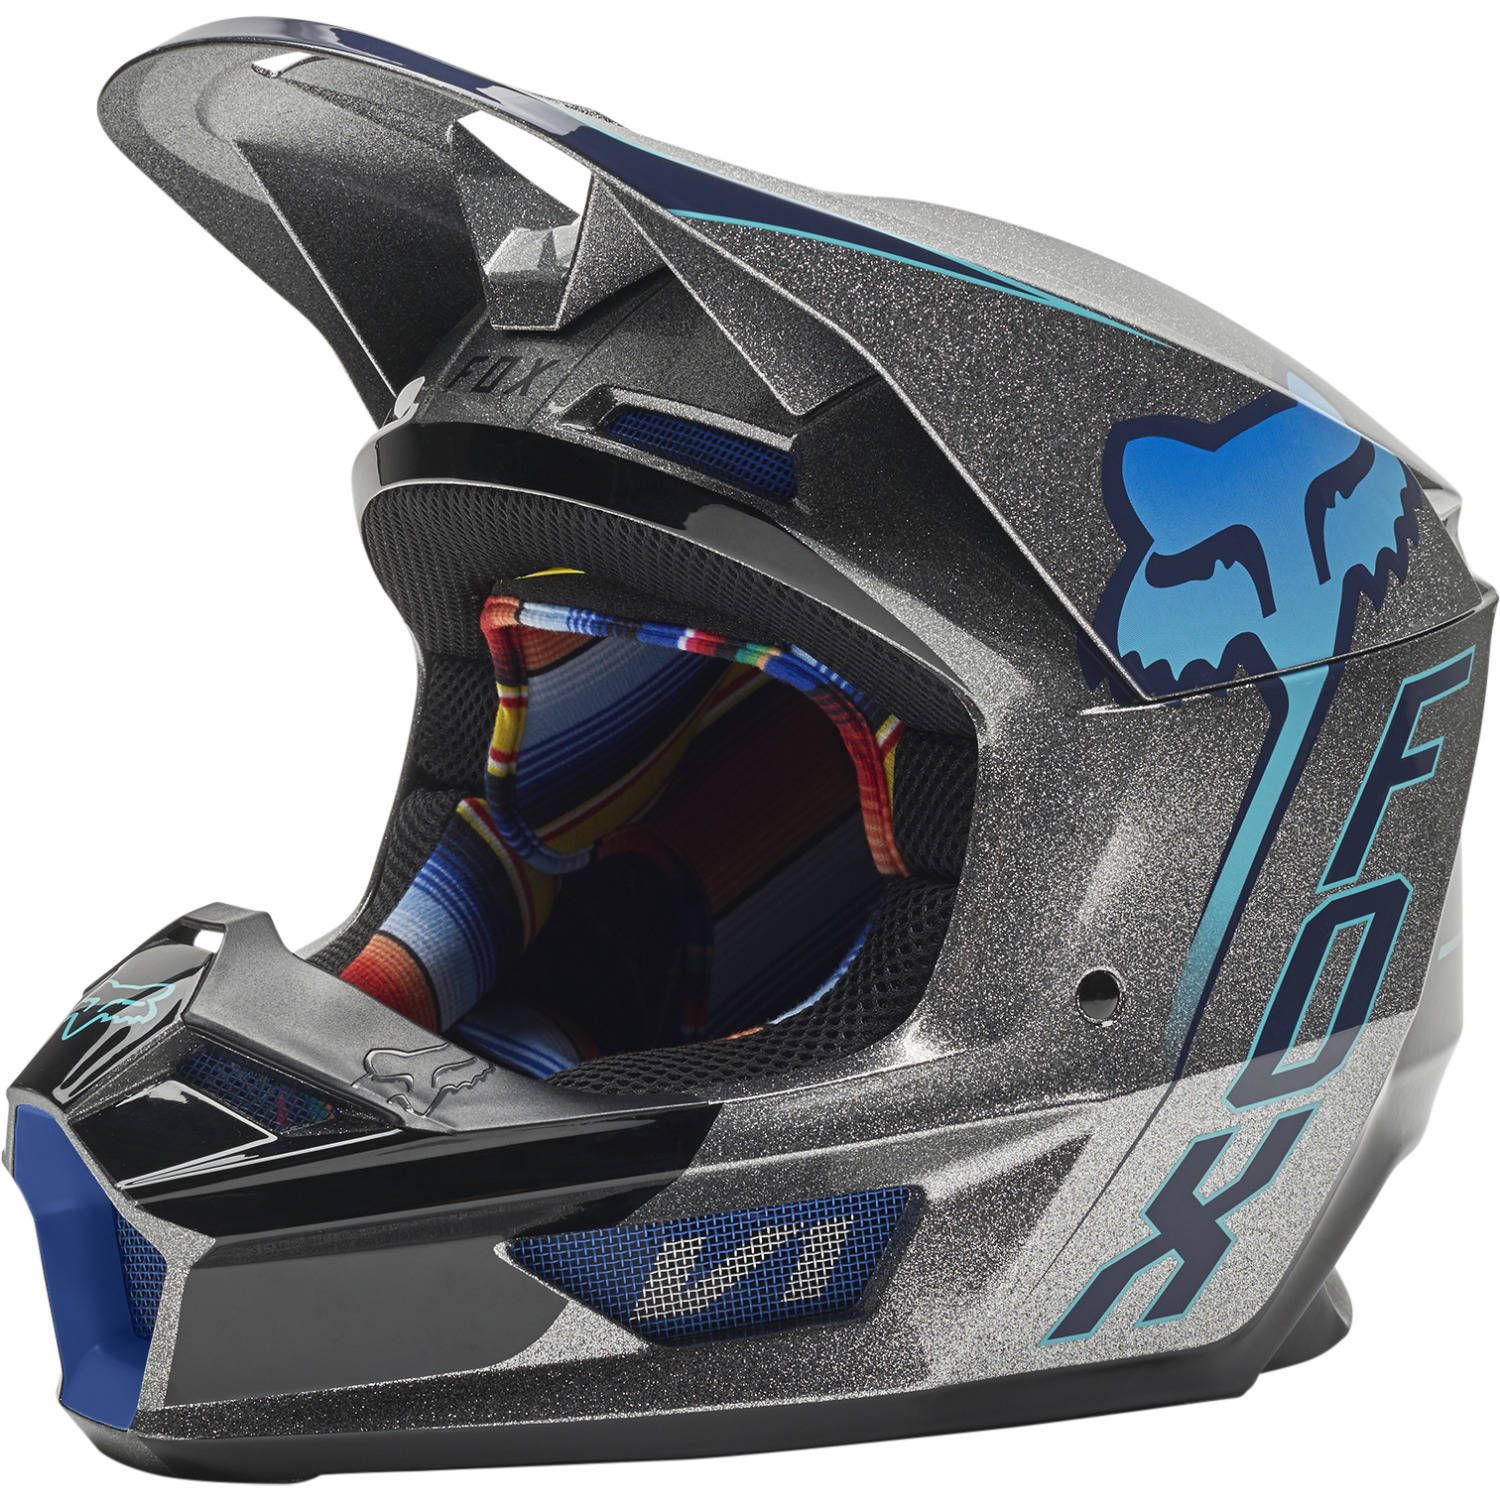 Fox Racing V1 Cntro LE Helmet - Ottawa Goodtime Centre 